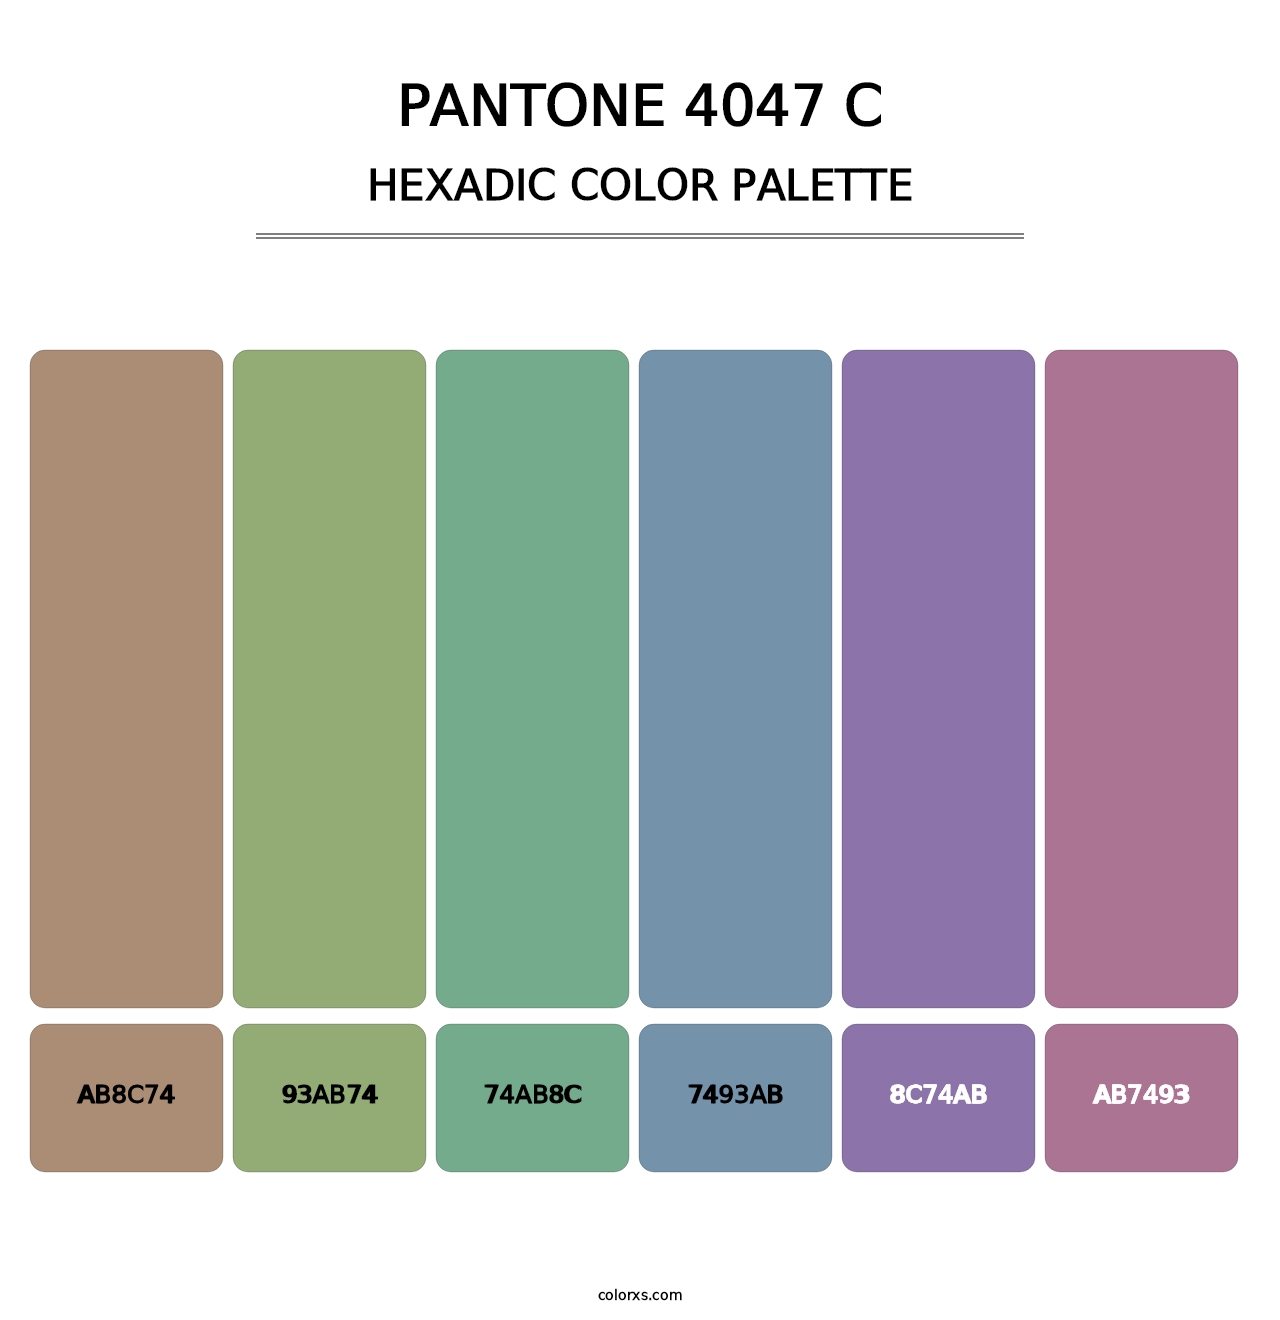 PANTONE 4047 C - Hexadic Color Palette